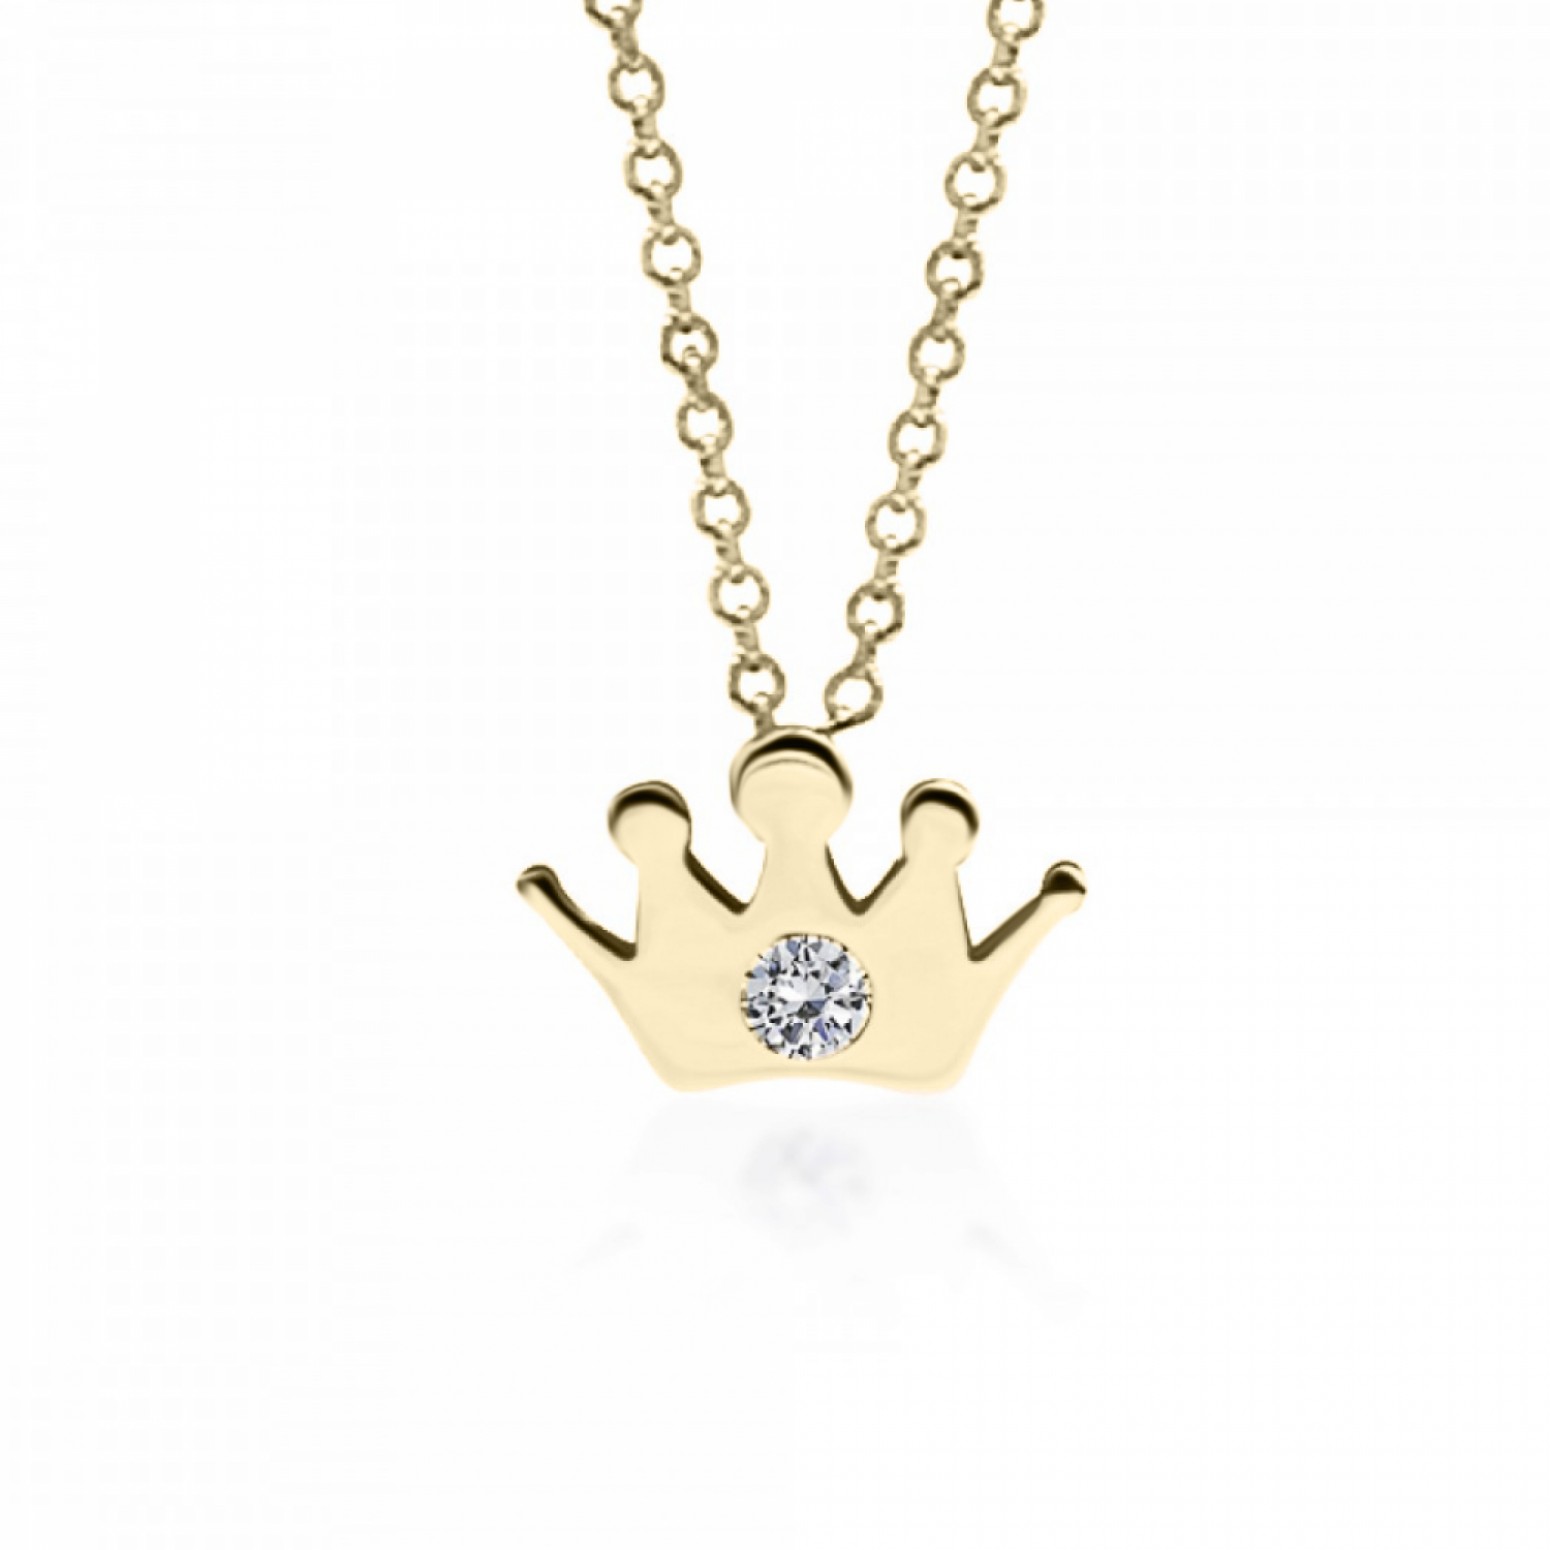 Crown necklace, Κ14 gold with diamond 0.02ct, VS2, H pk0203 NECKLACES Κοσμηματα - chrilia.gr